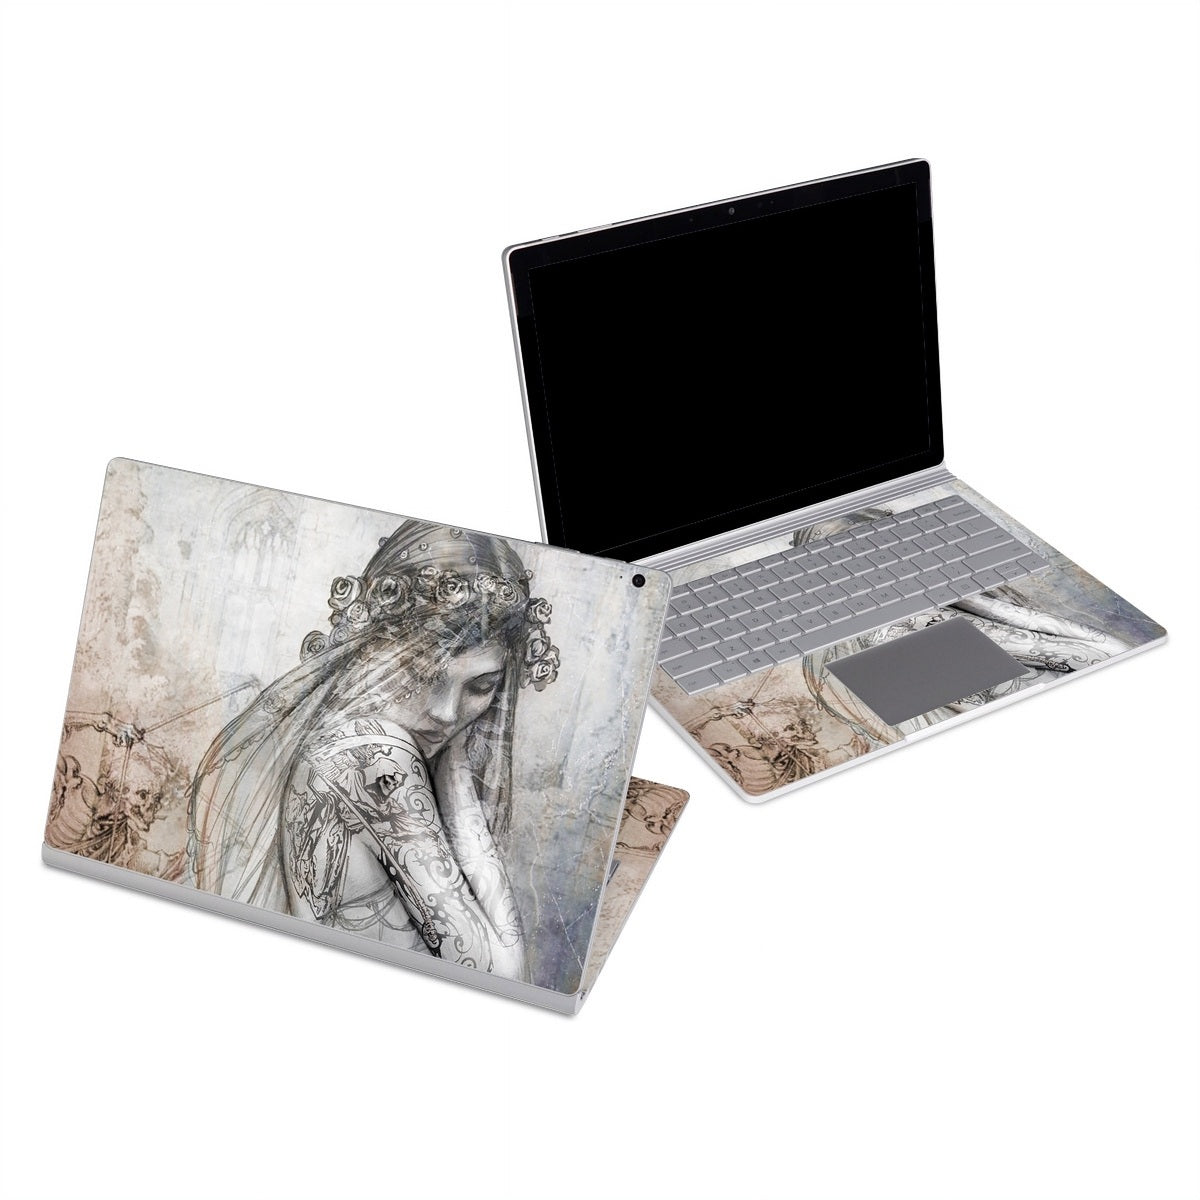 Scythe Bride - Microsoft Surface Book Skin